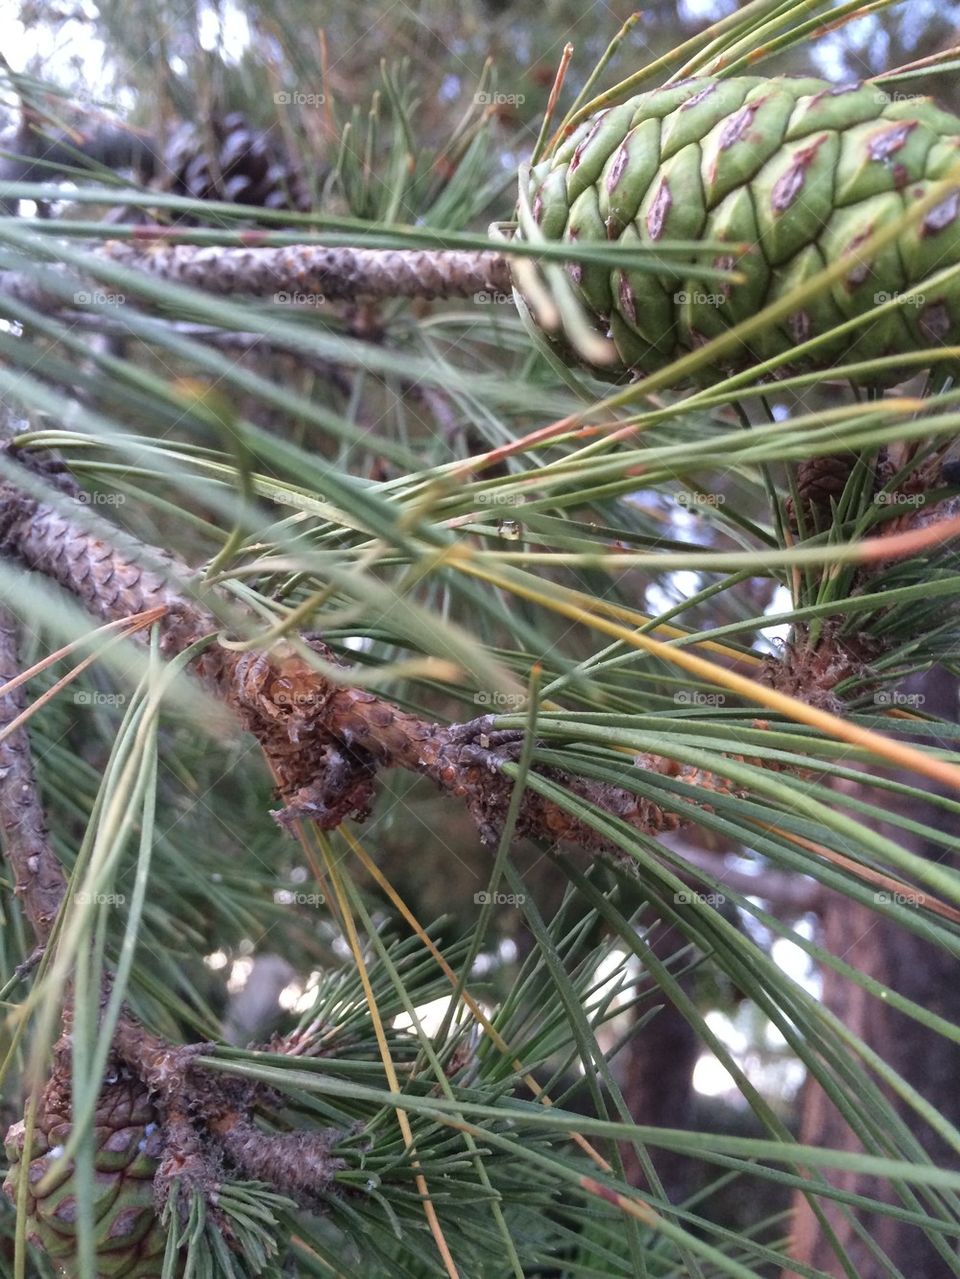 Green pine cone